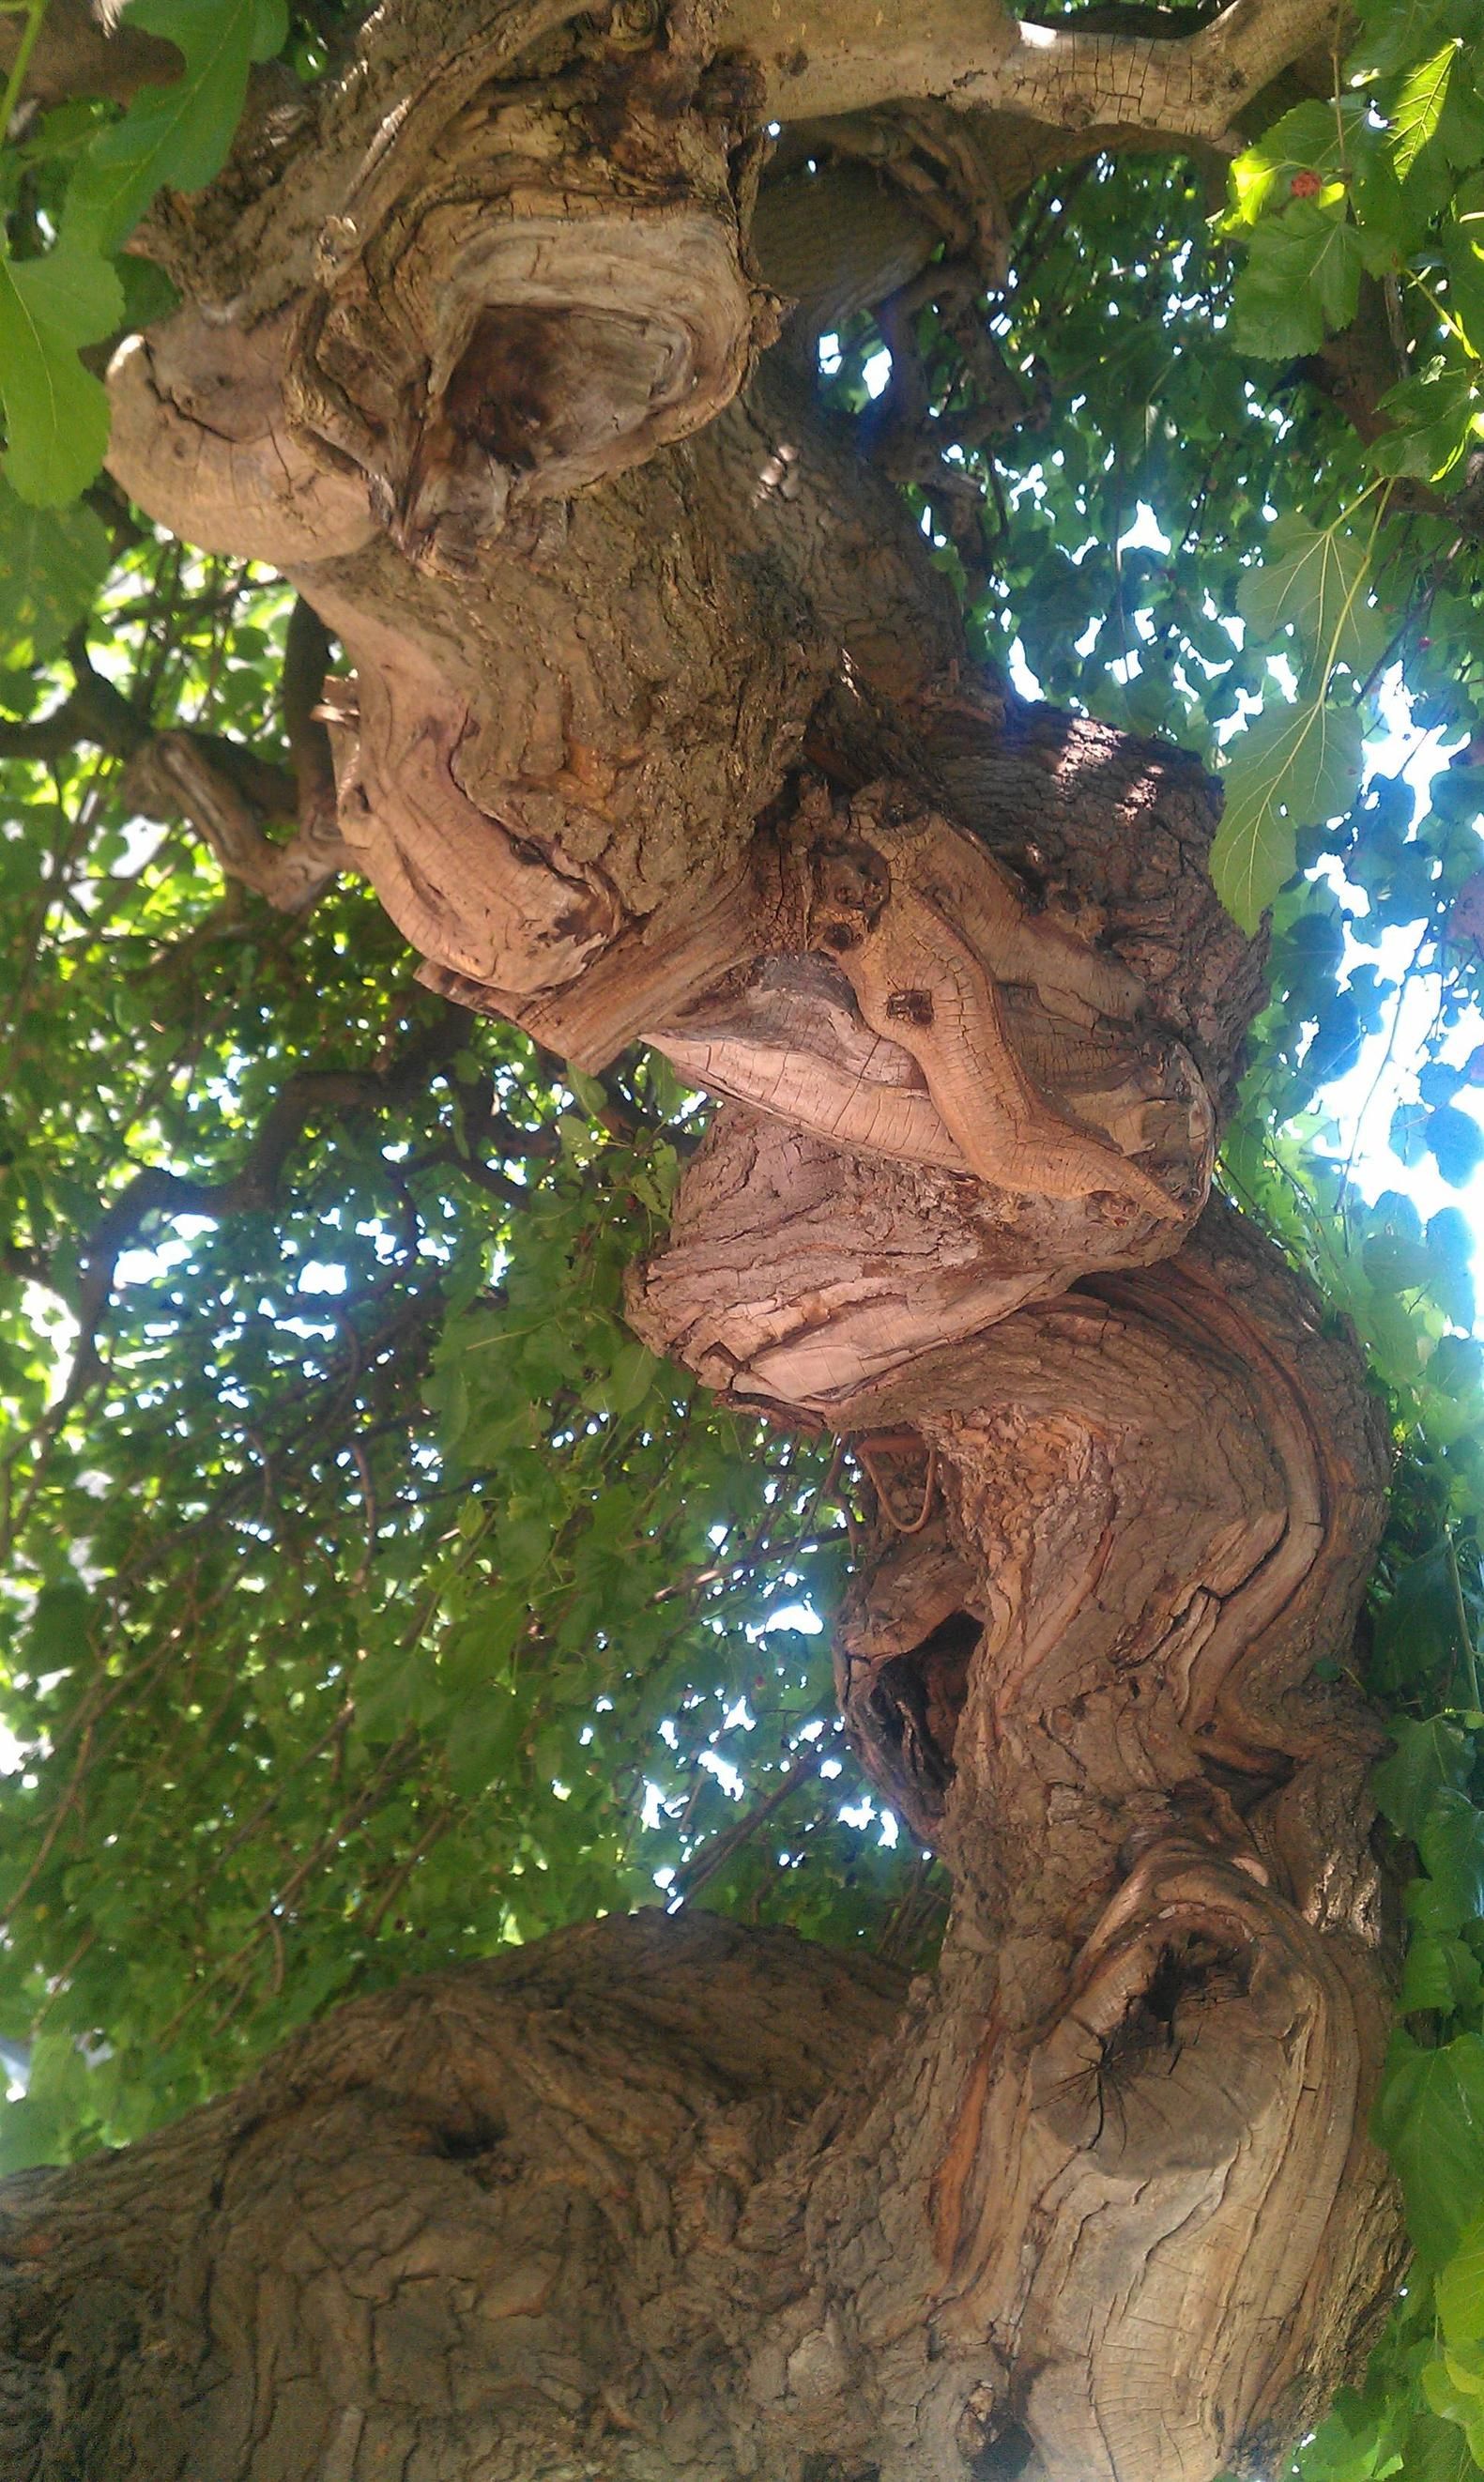 Twisted tree trunk | tree species | Pinterest | Tree trunks, Tree ...